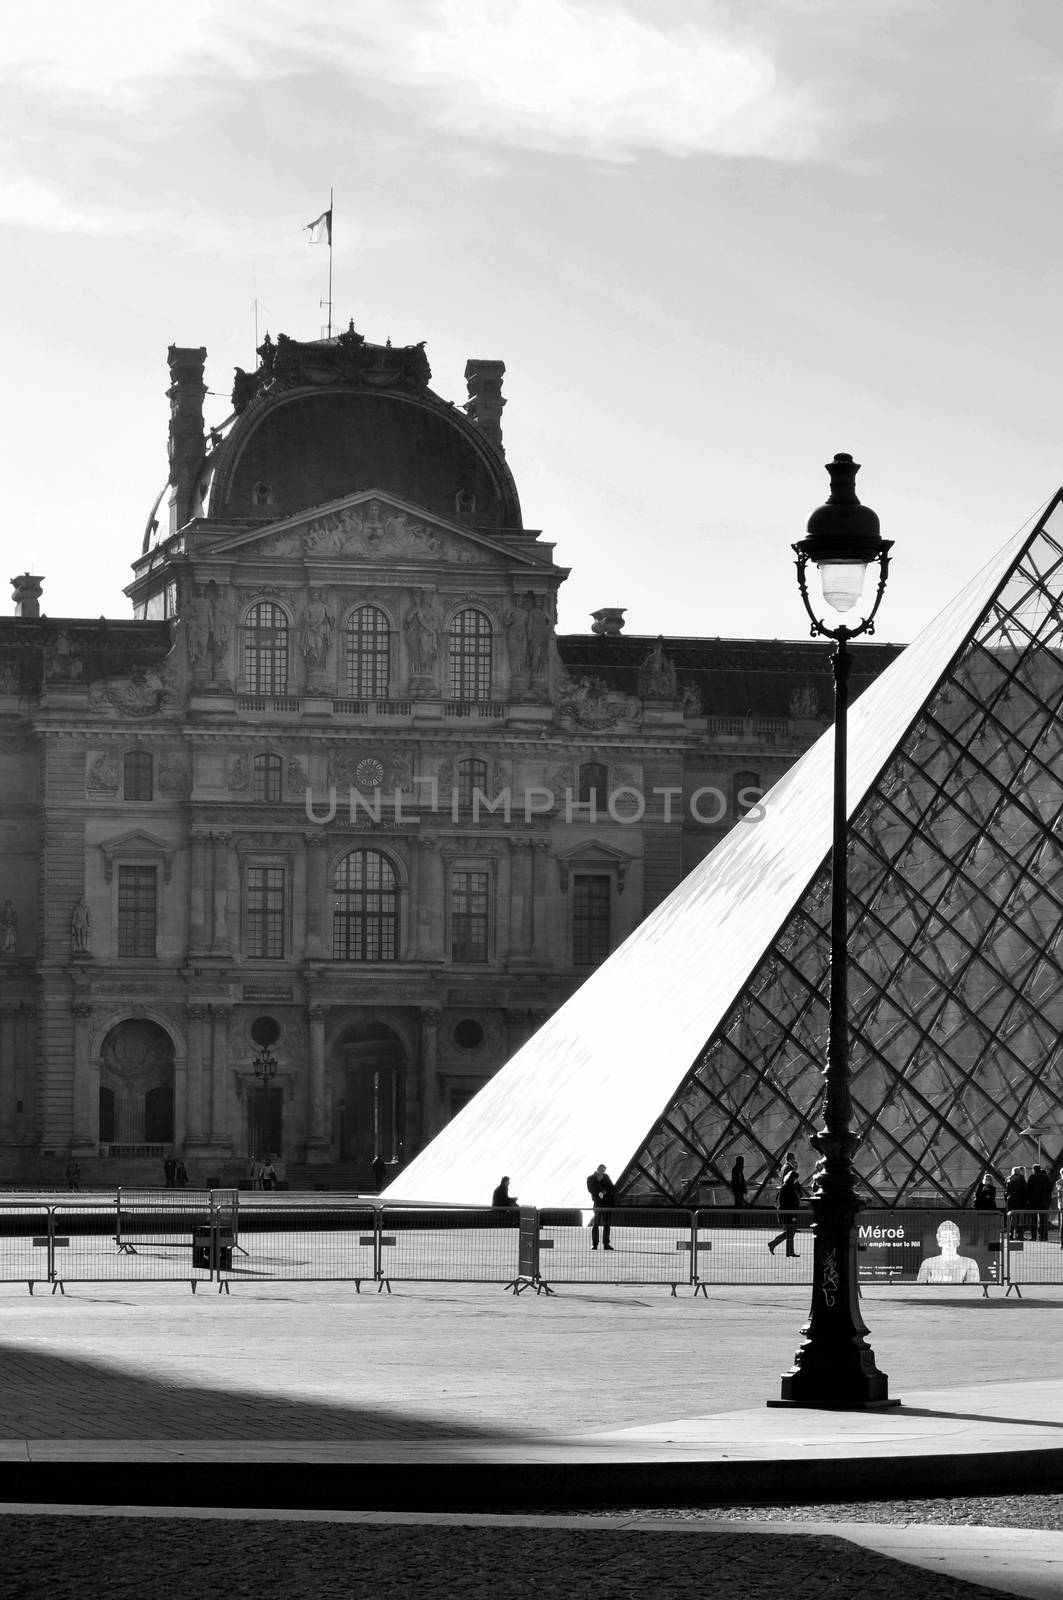 The Louvre Museum in Paris by dutourdumonde